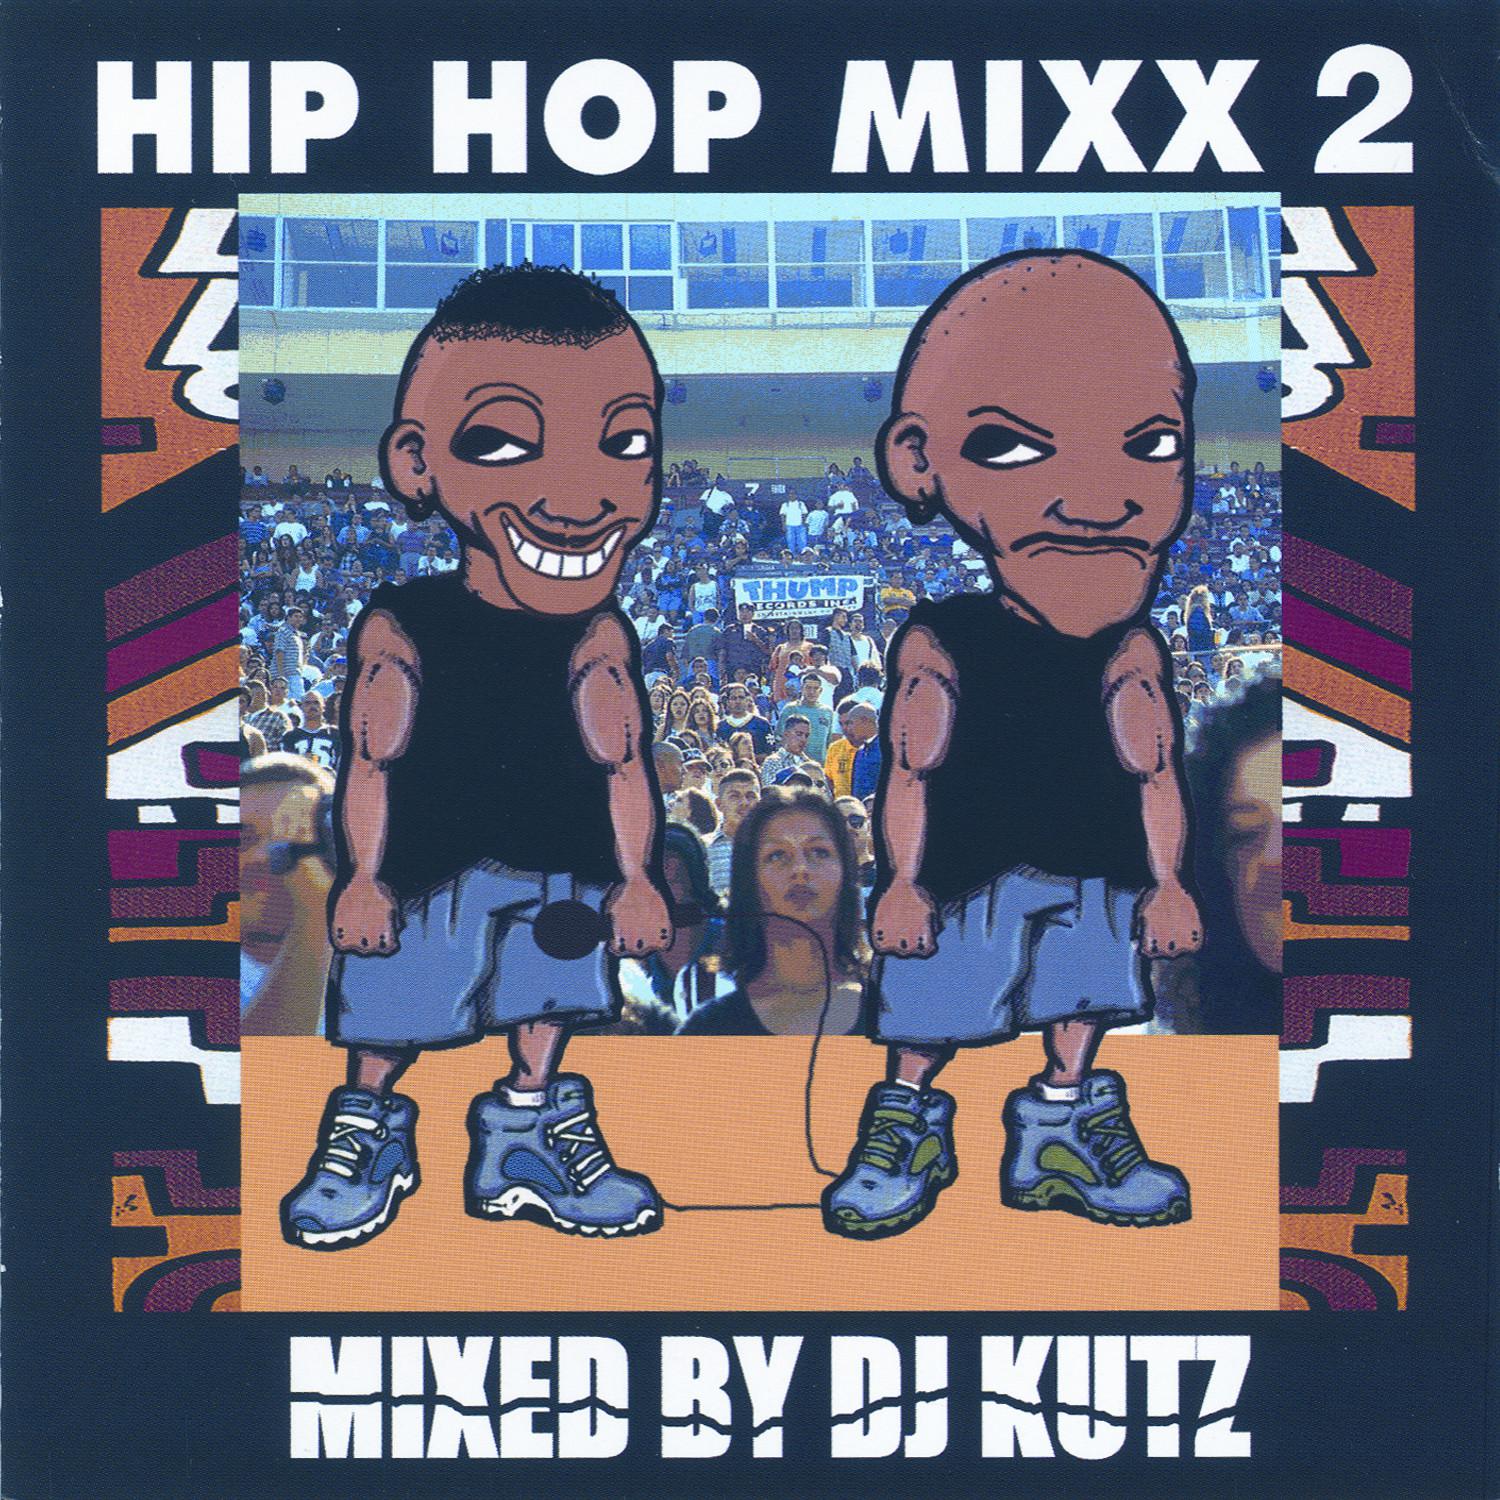 Hip Hop Mixx 2